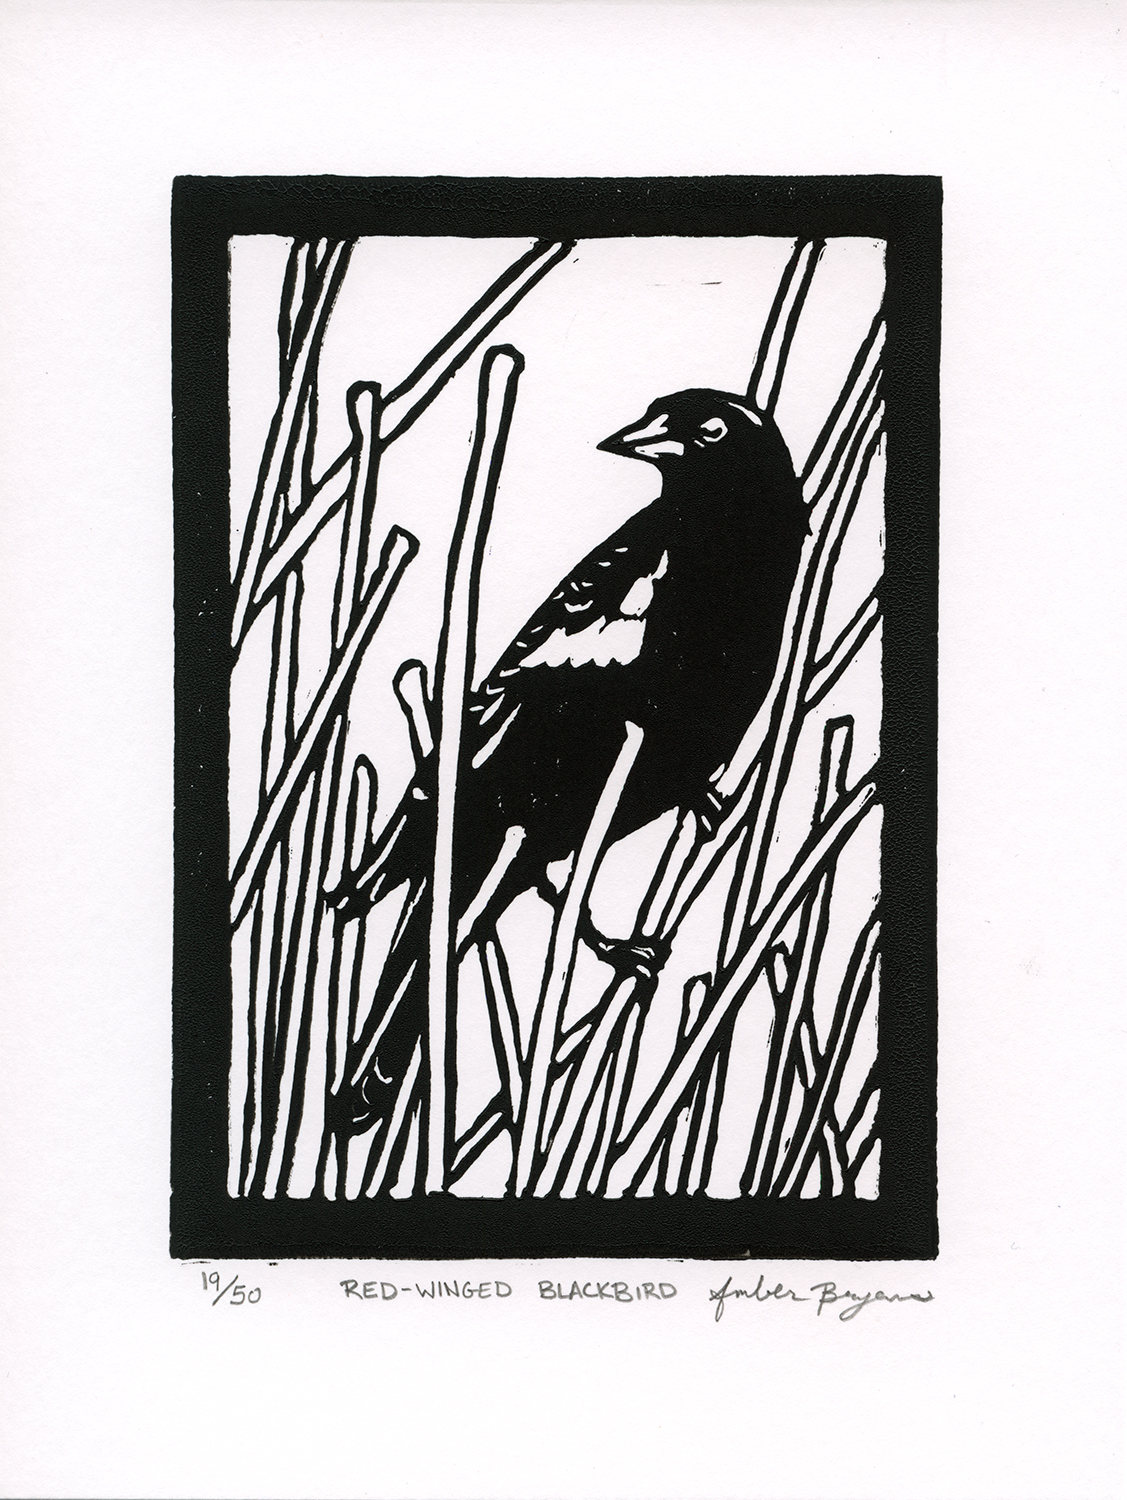 Red-Winged Blackbird linocut print